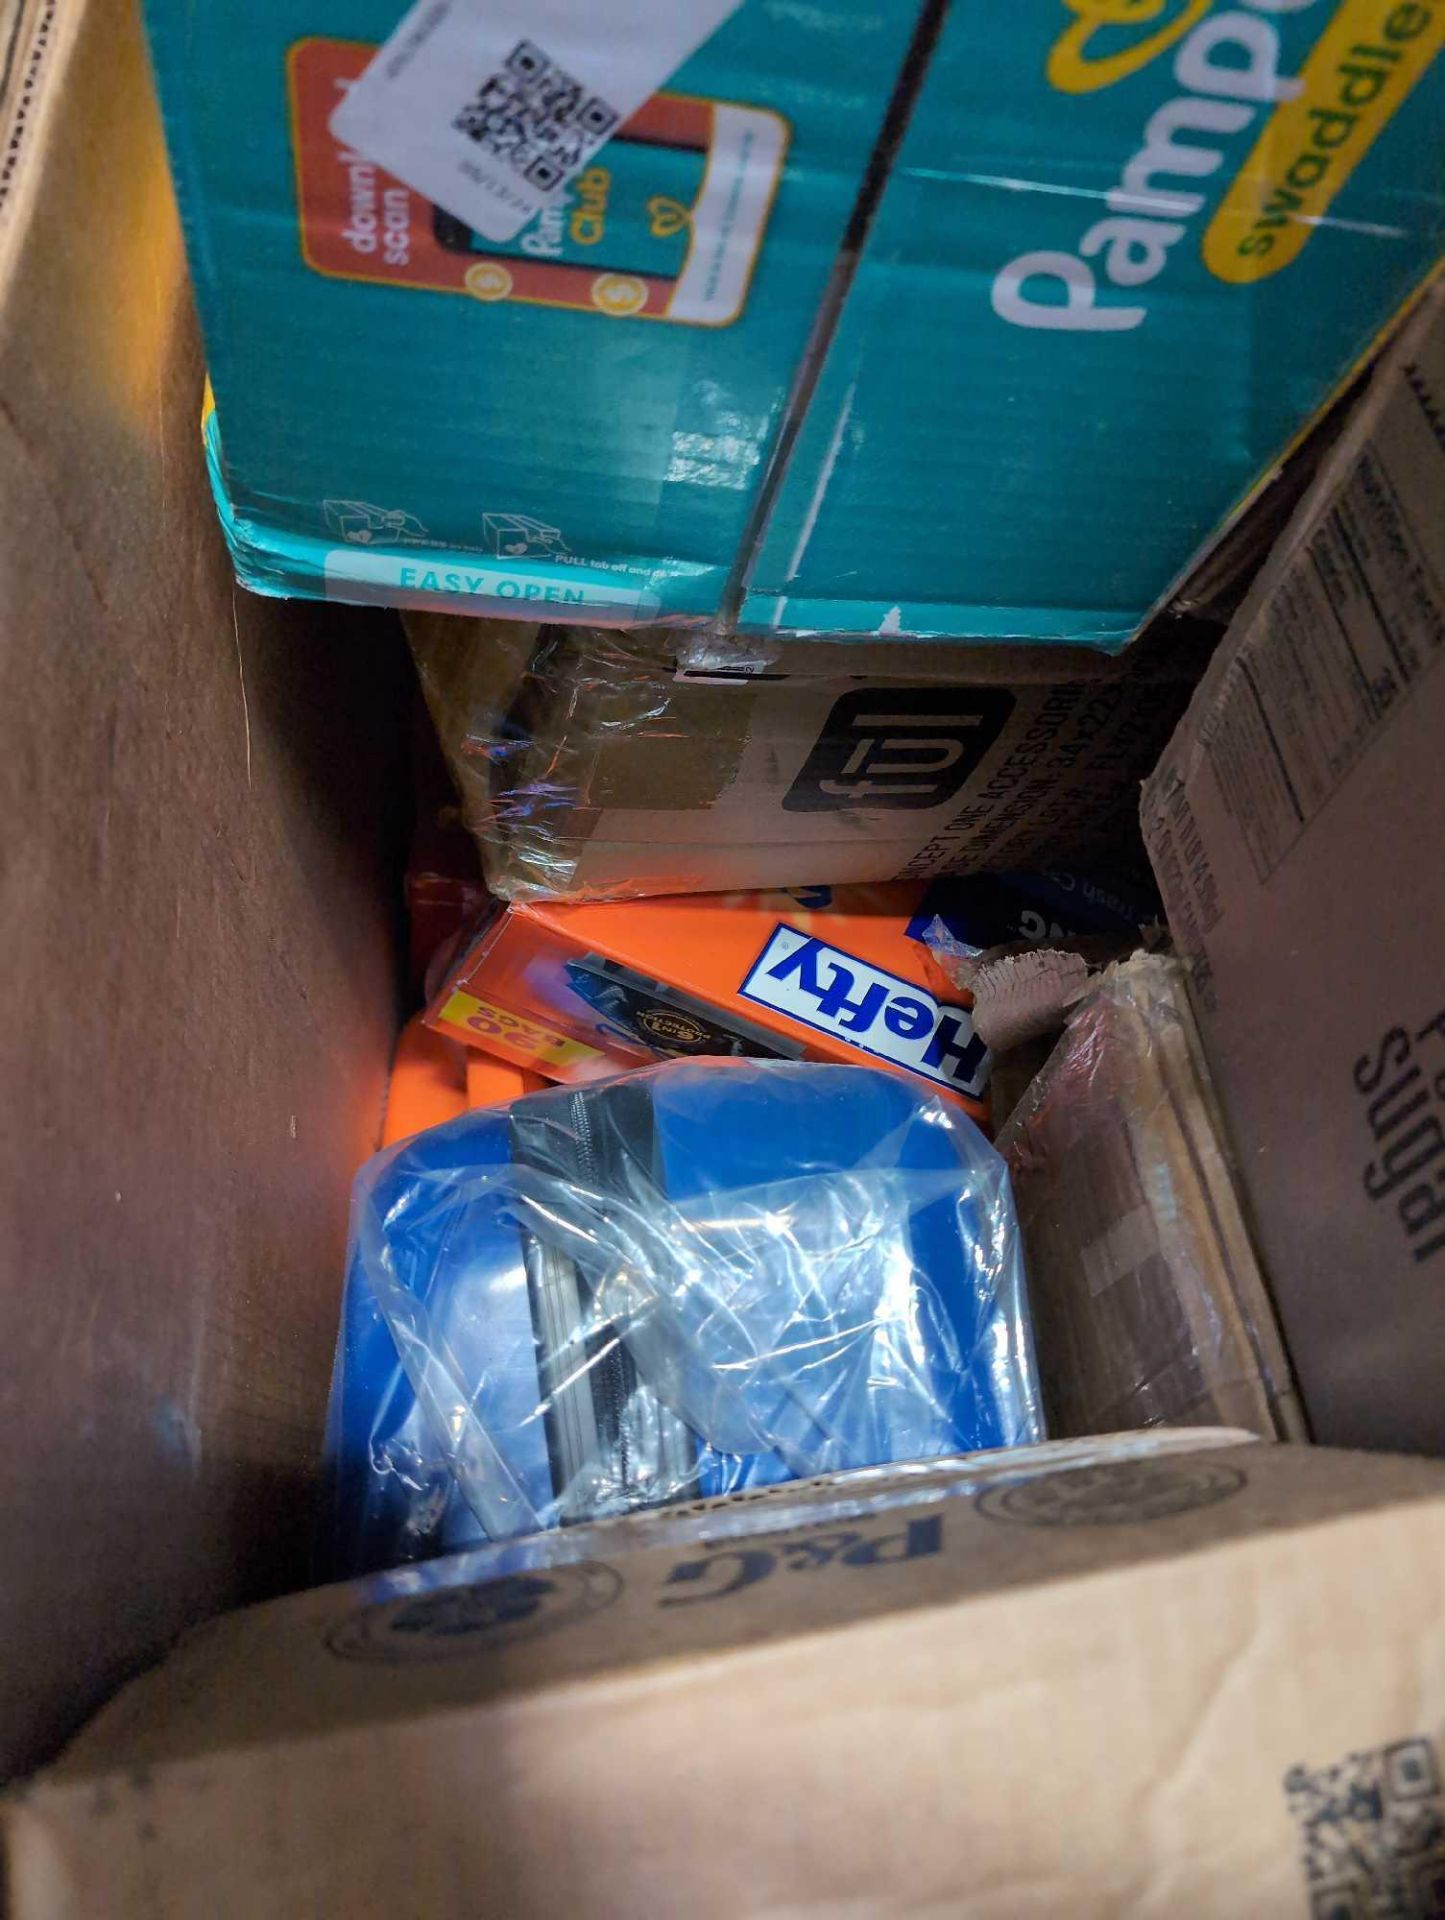 Big box store in a box: Nutrigrain, Soft hands, ziplic, popchips, dishwasher detergent, croutons, Ke - Image 11 of 14